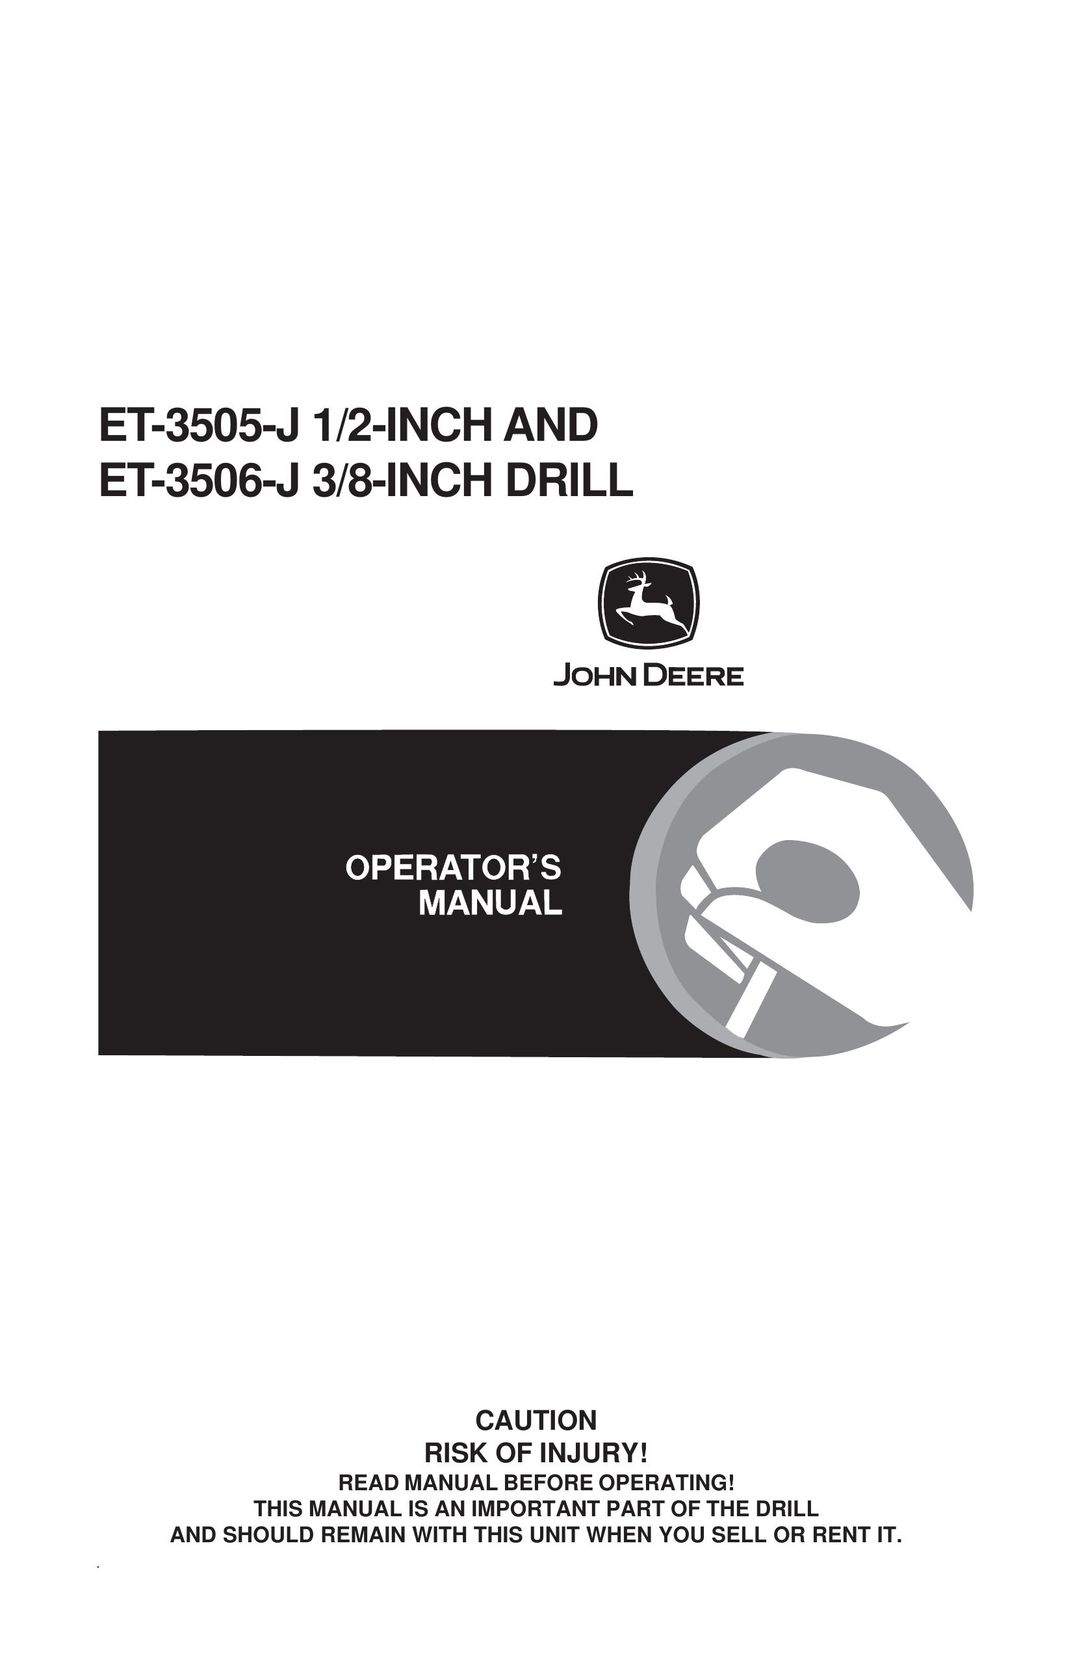 John Deere ET-3505-J Drill User Manual